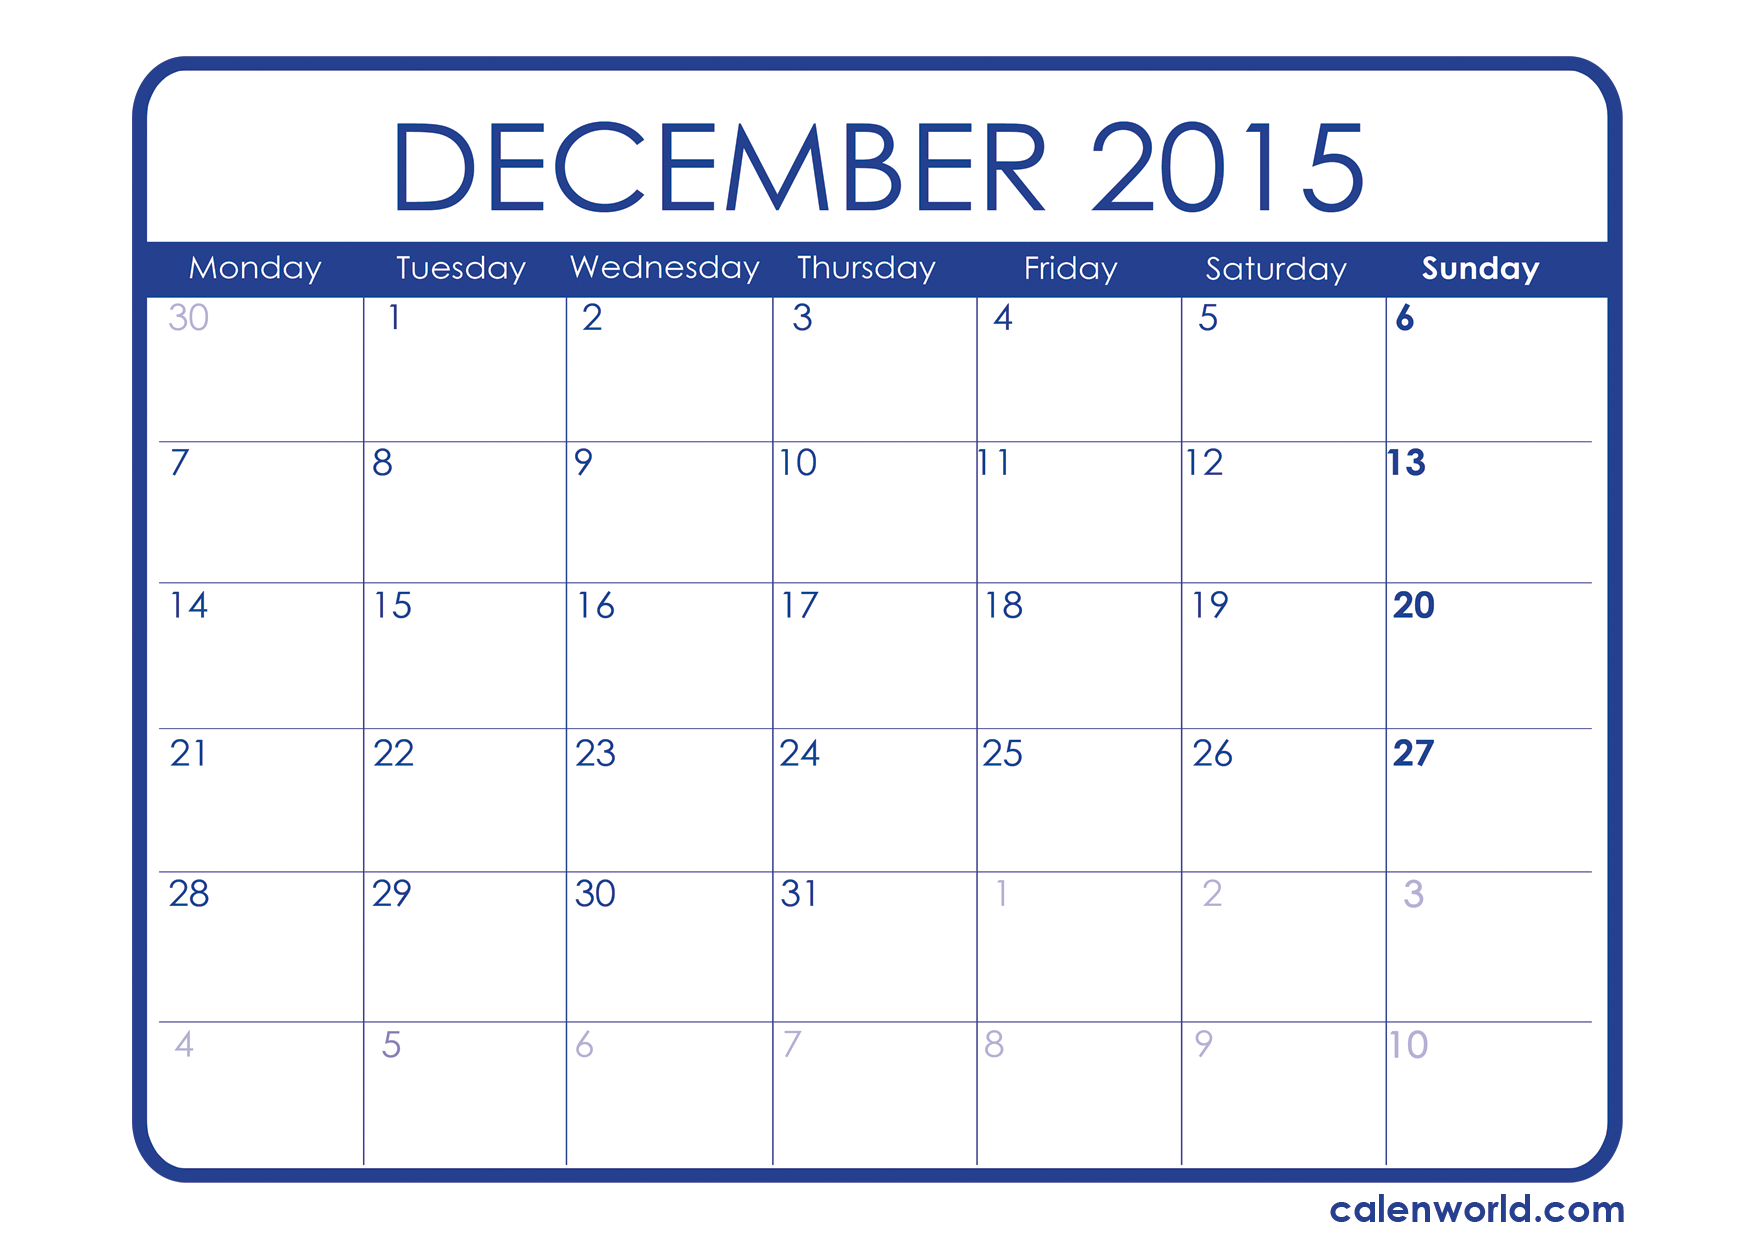 December 2015 Calendar   Printable Calendars